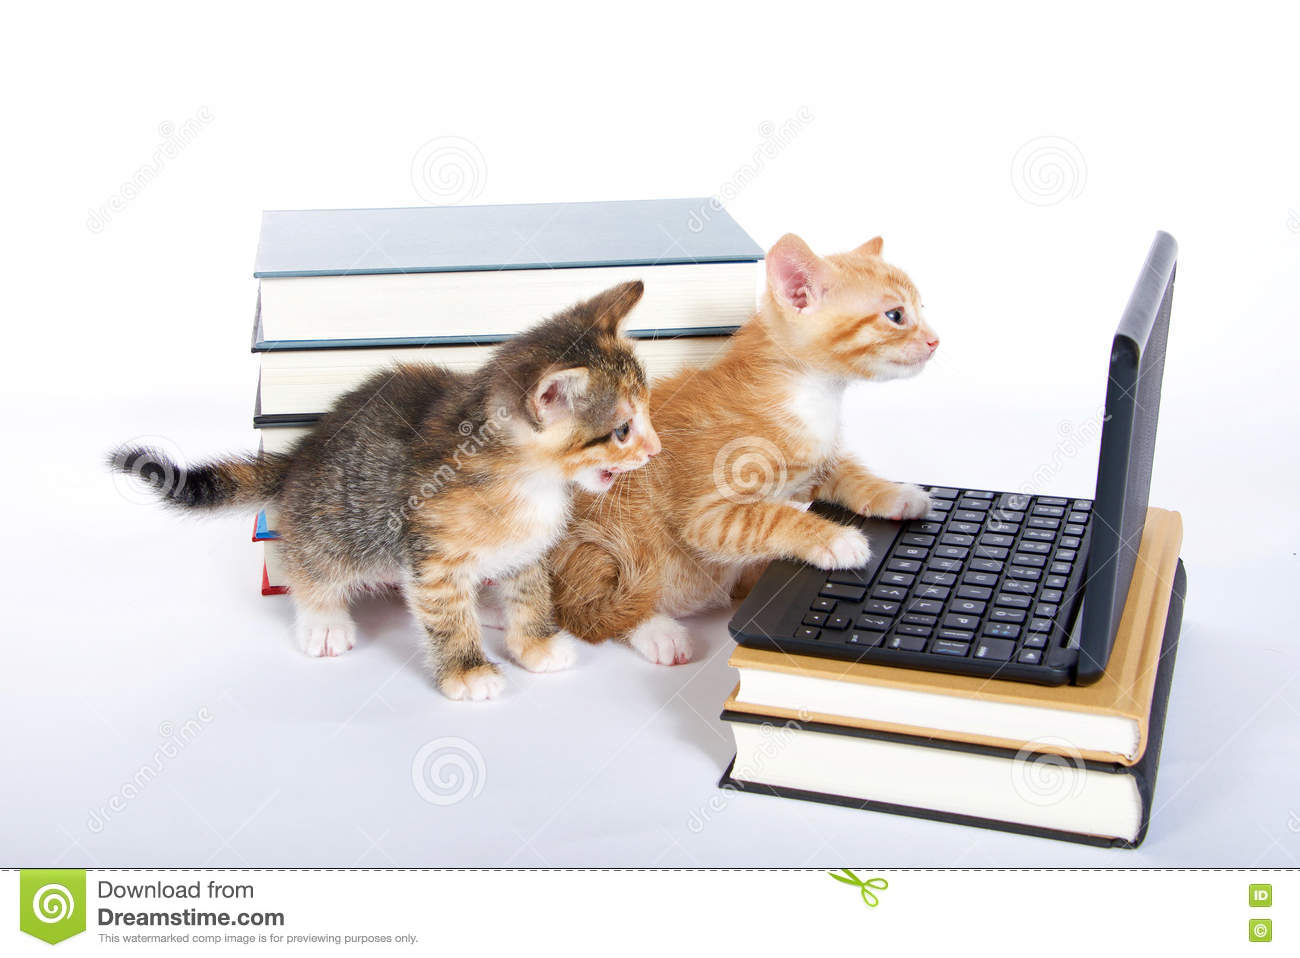 two-kittens-laptop-computer-books-male-orange-tabby-kitten-looking-miniature-type-female-calico-tortie-sitting-behind-71290629.jpg